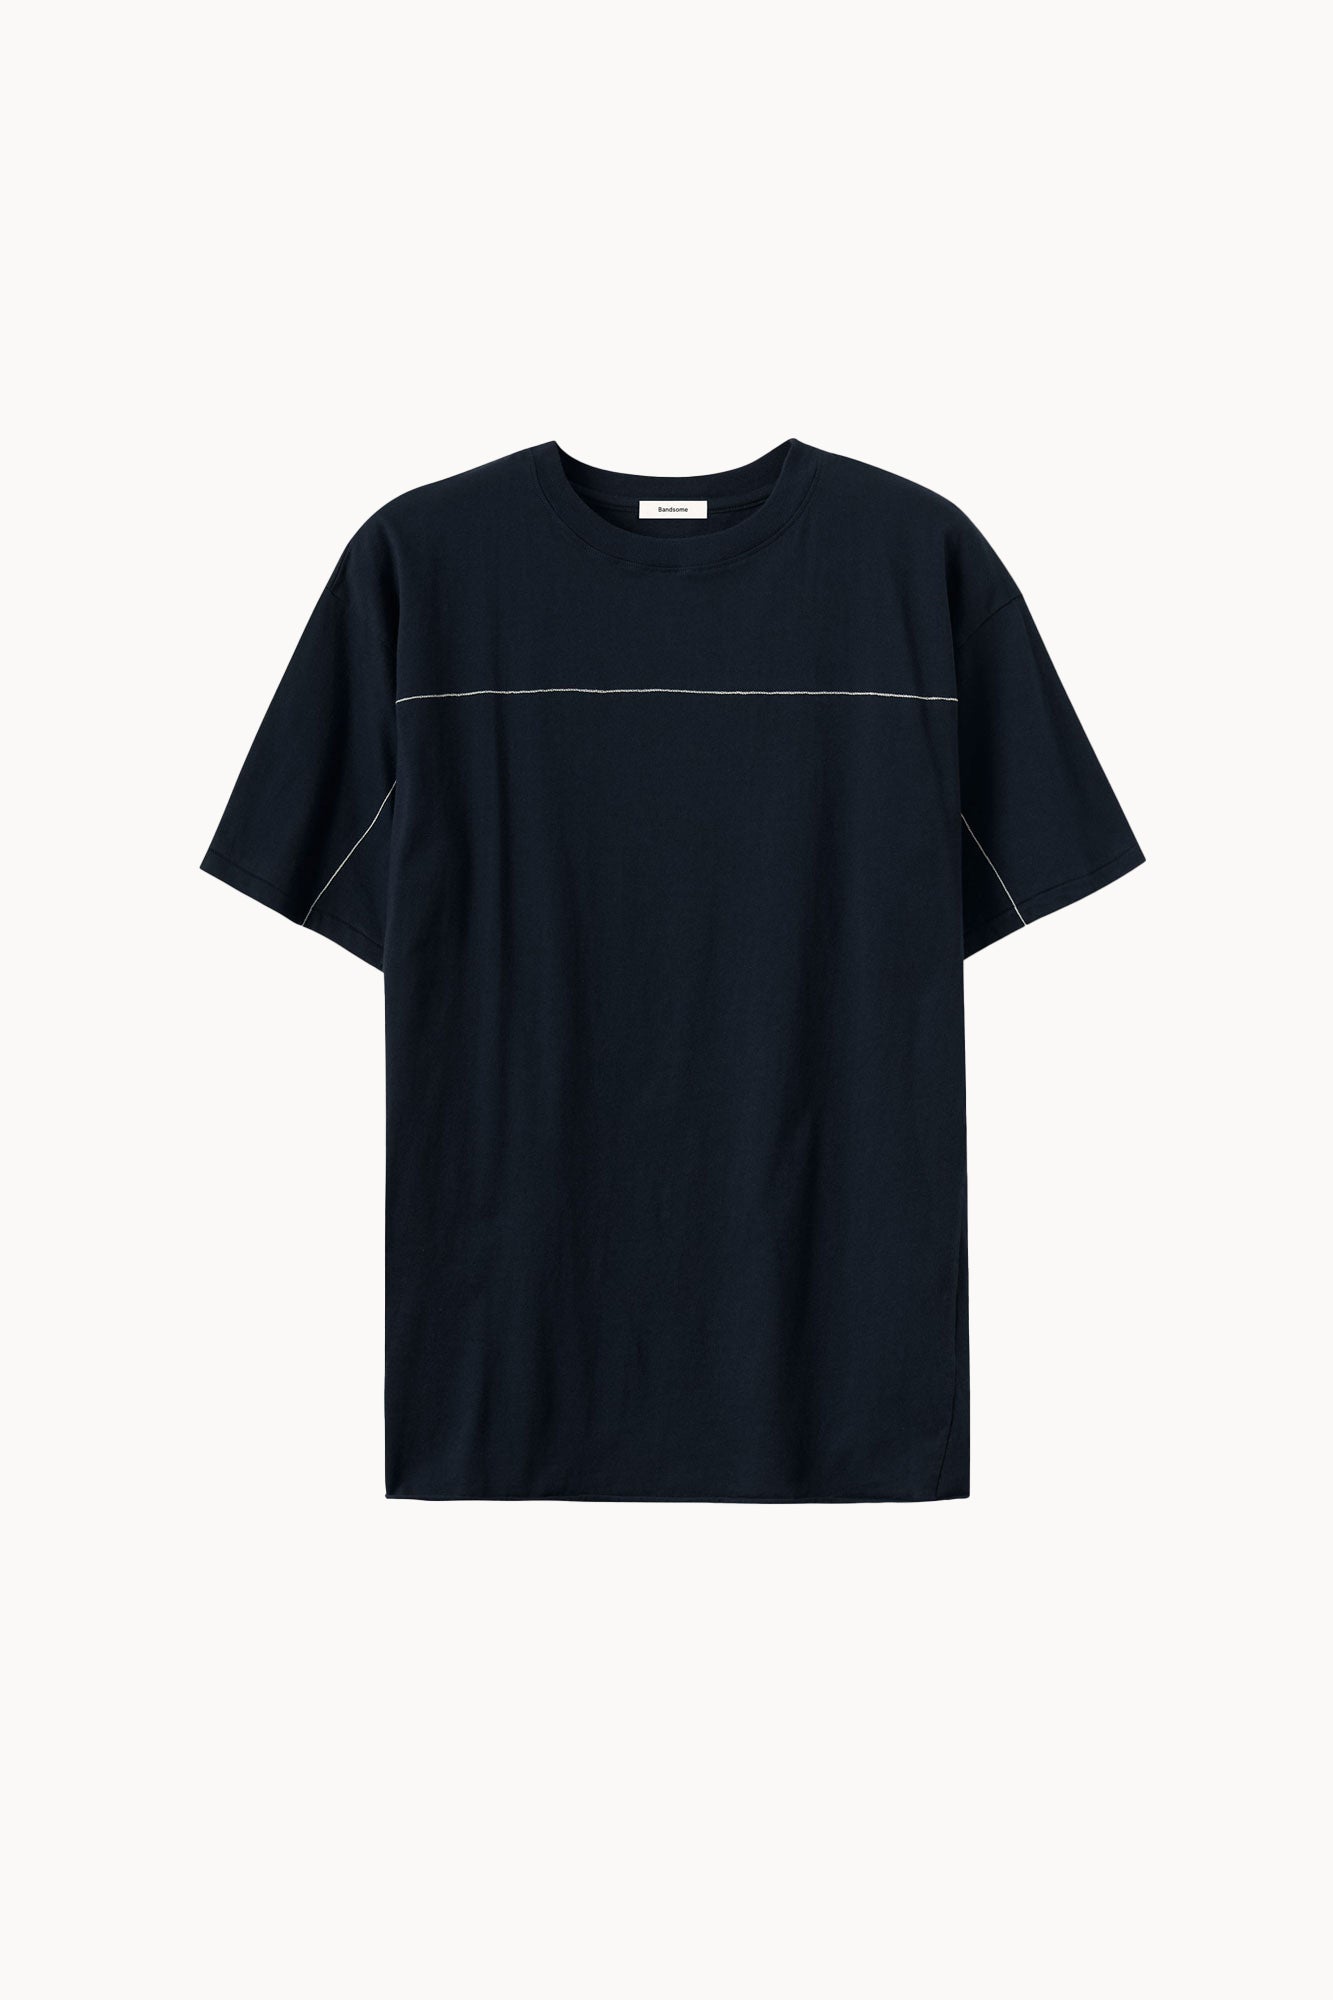 box t-shirt navy stitch